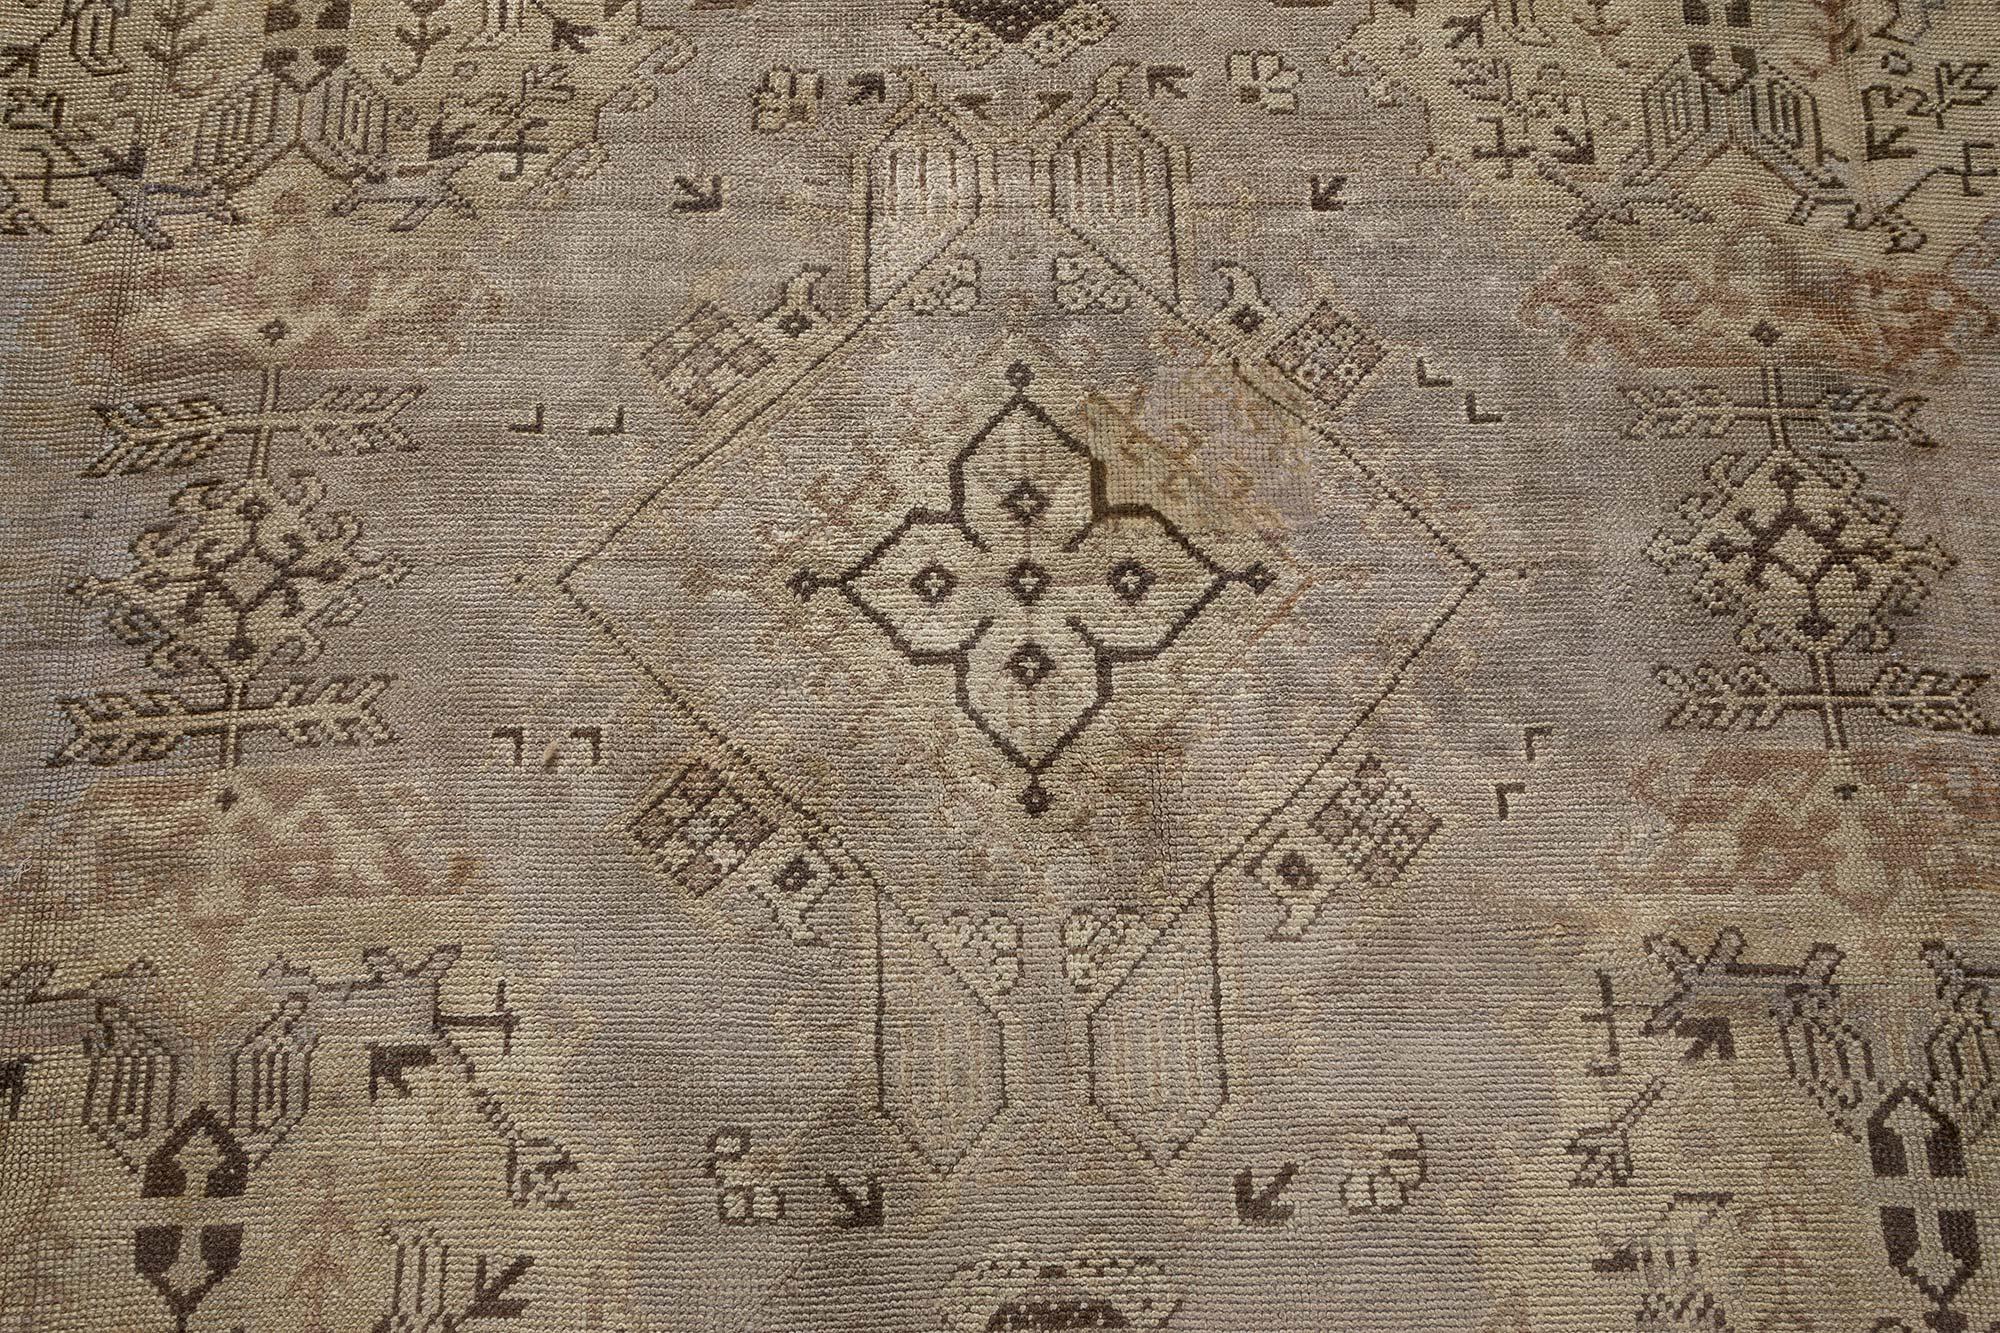 Authentic Early 20th century Turkish Oushak rug
Size: 13'7